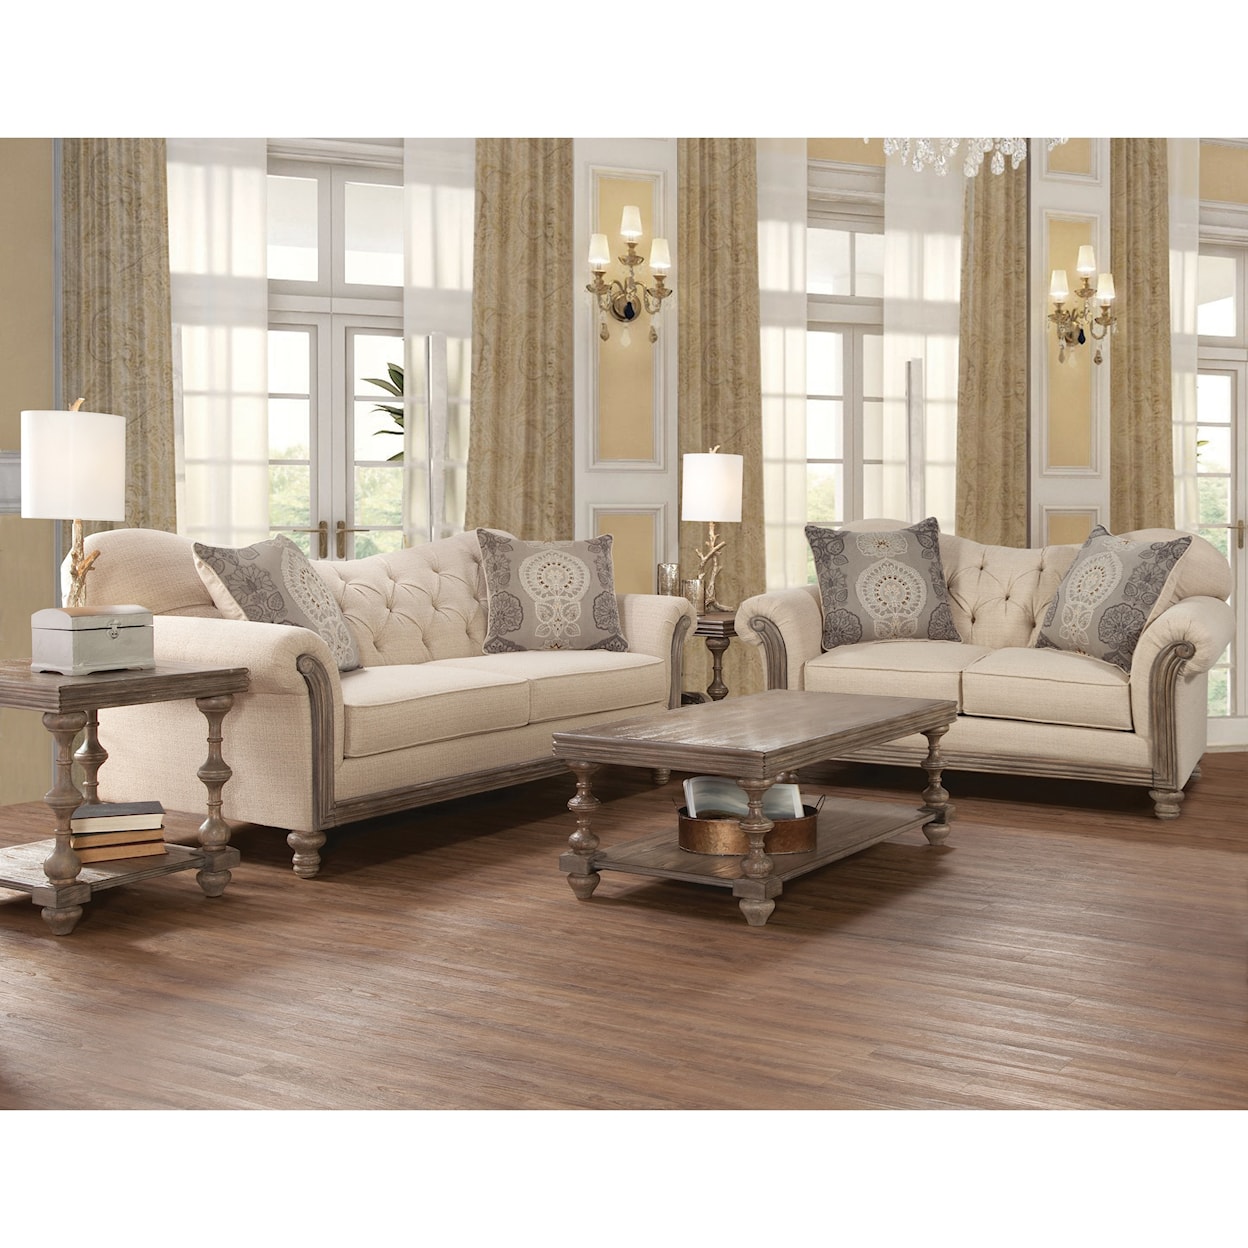 Hughes Furniture 8725 Traditional Sofa